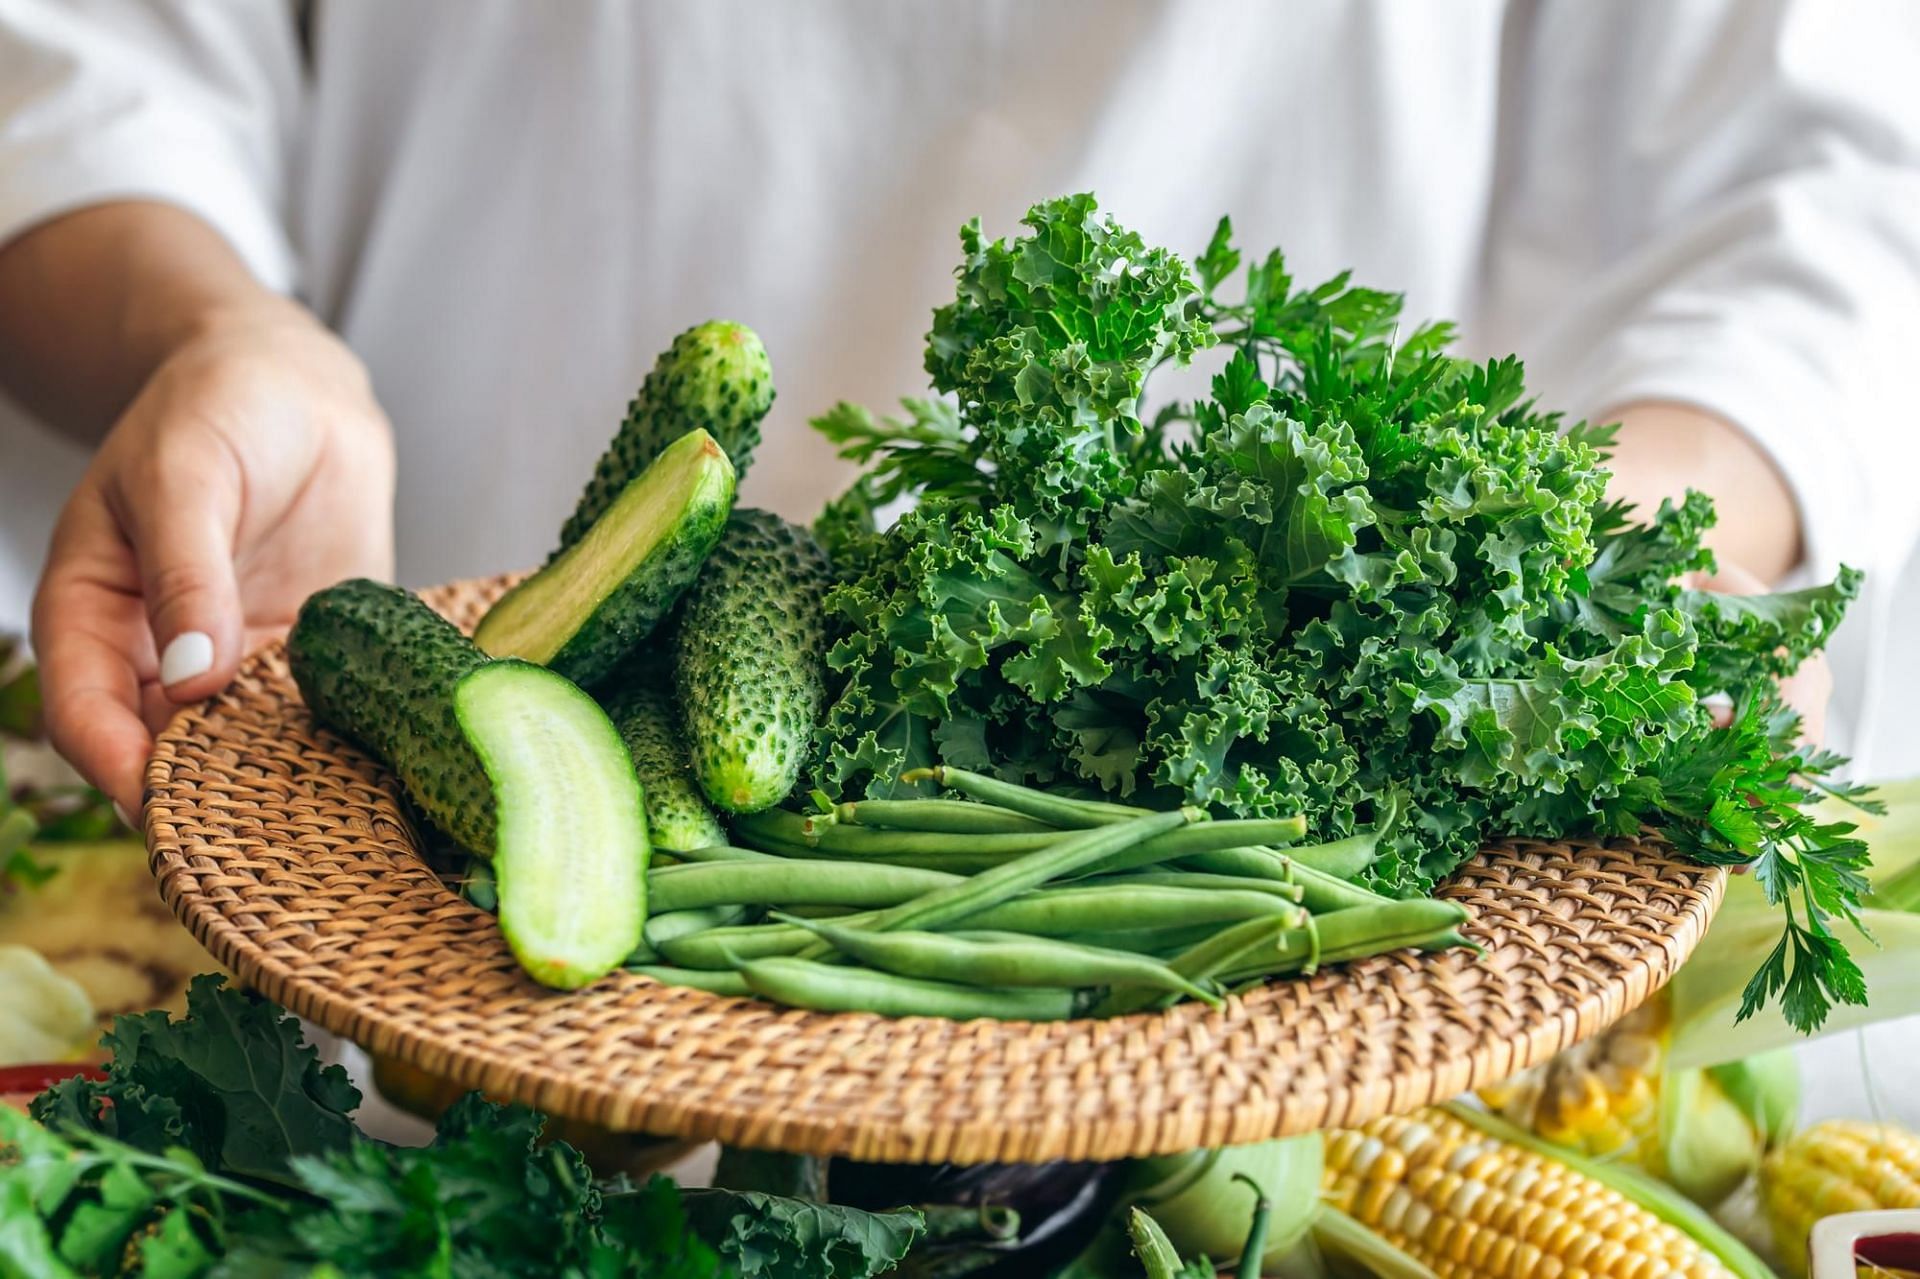 Kale contains powerful antioxidants. (Image via Freepik/pvproductions)